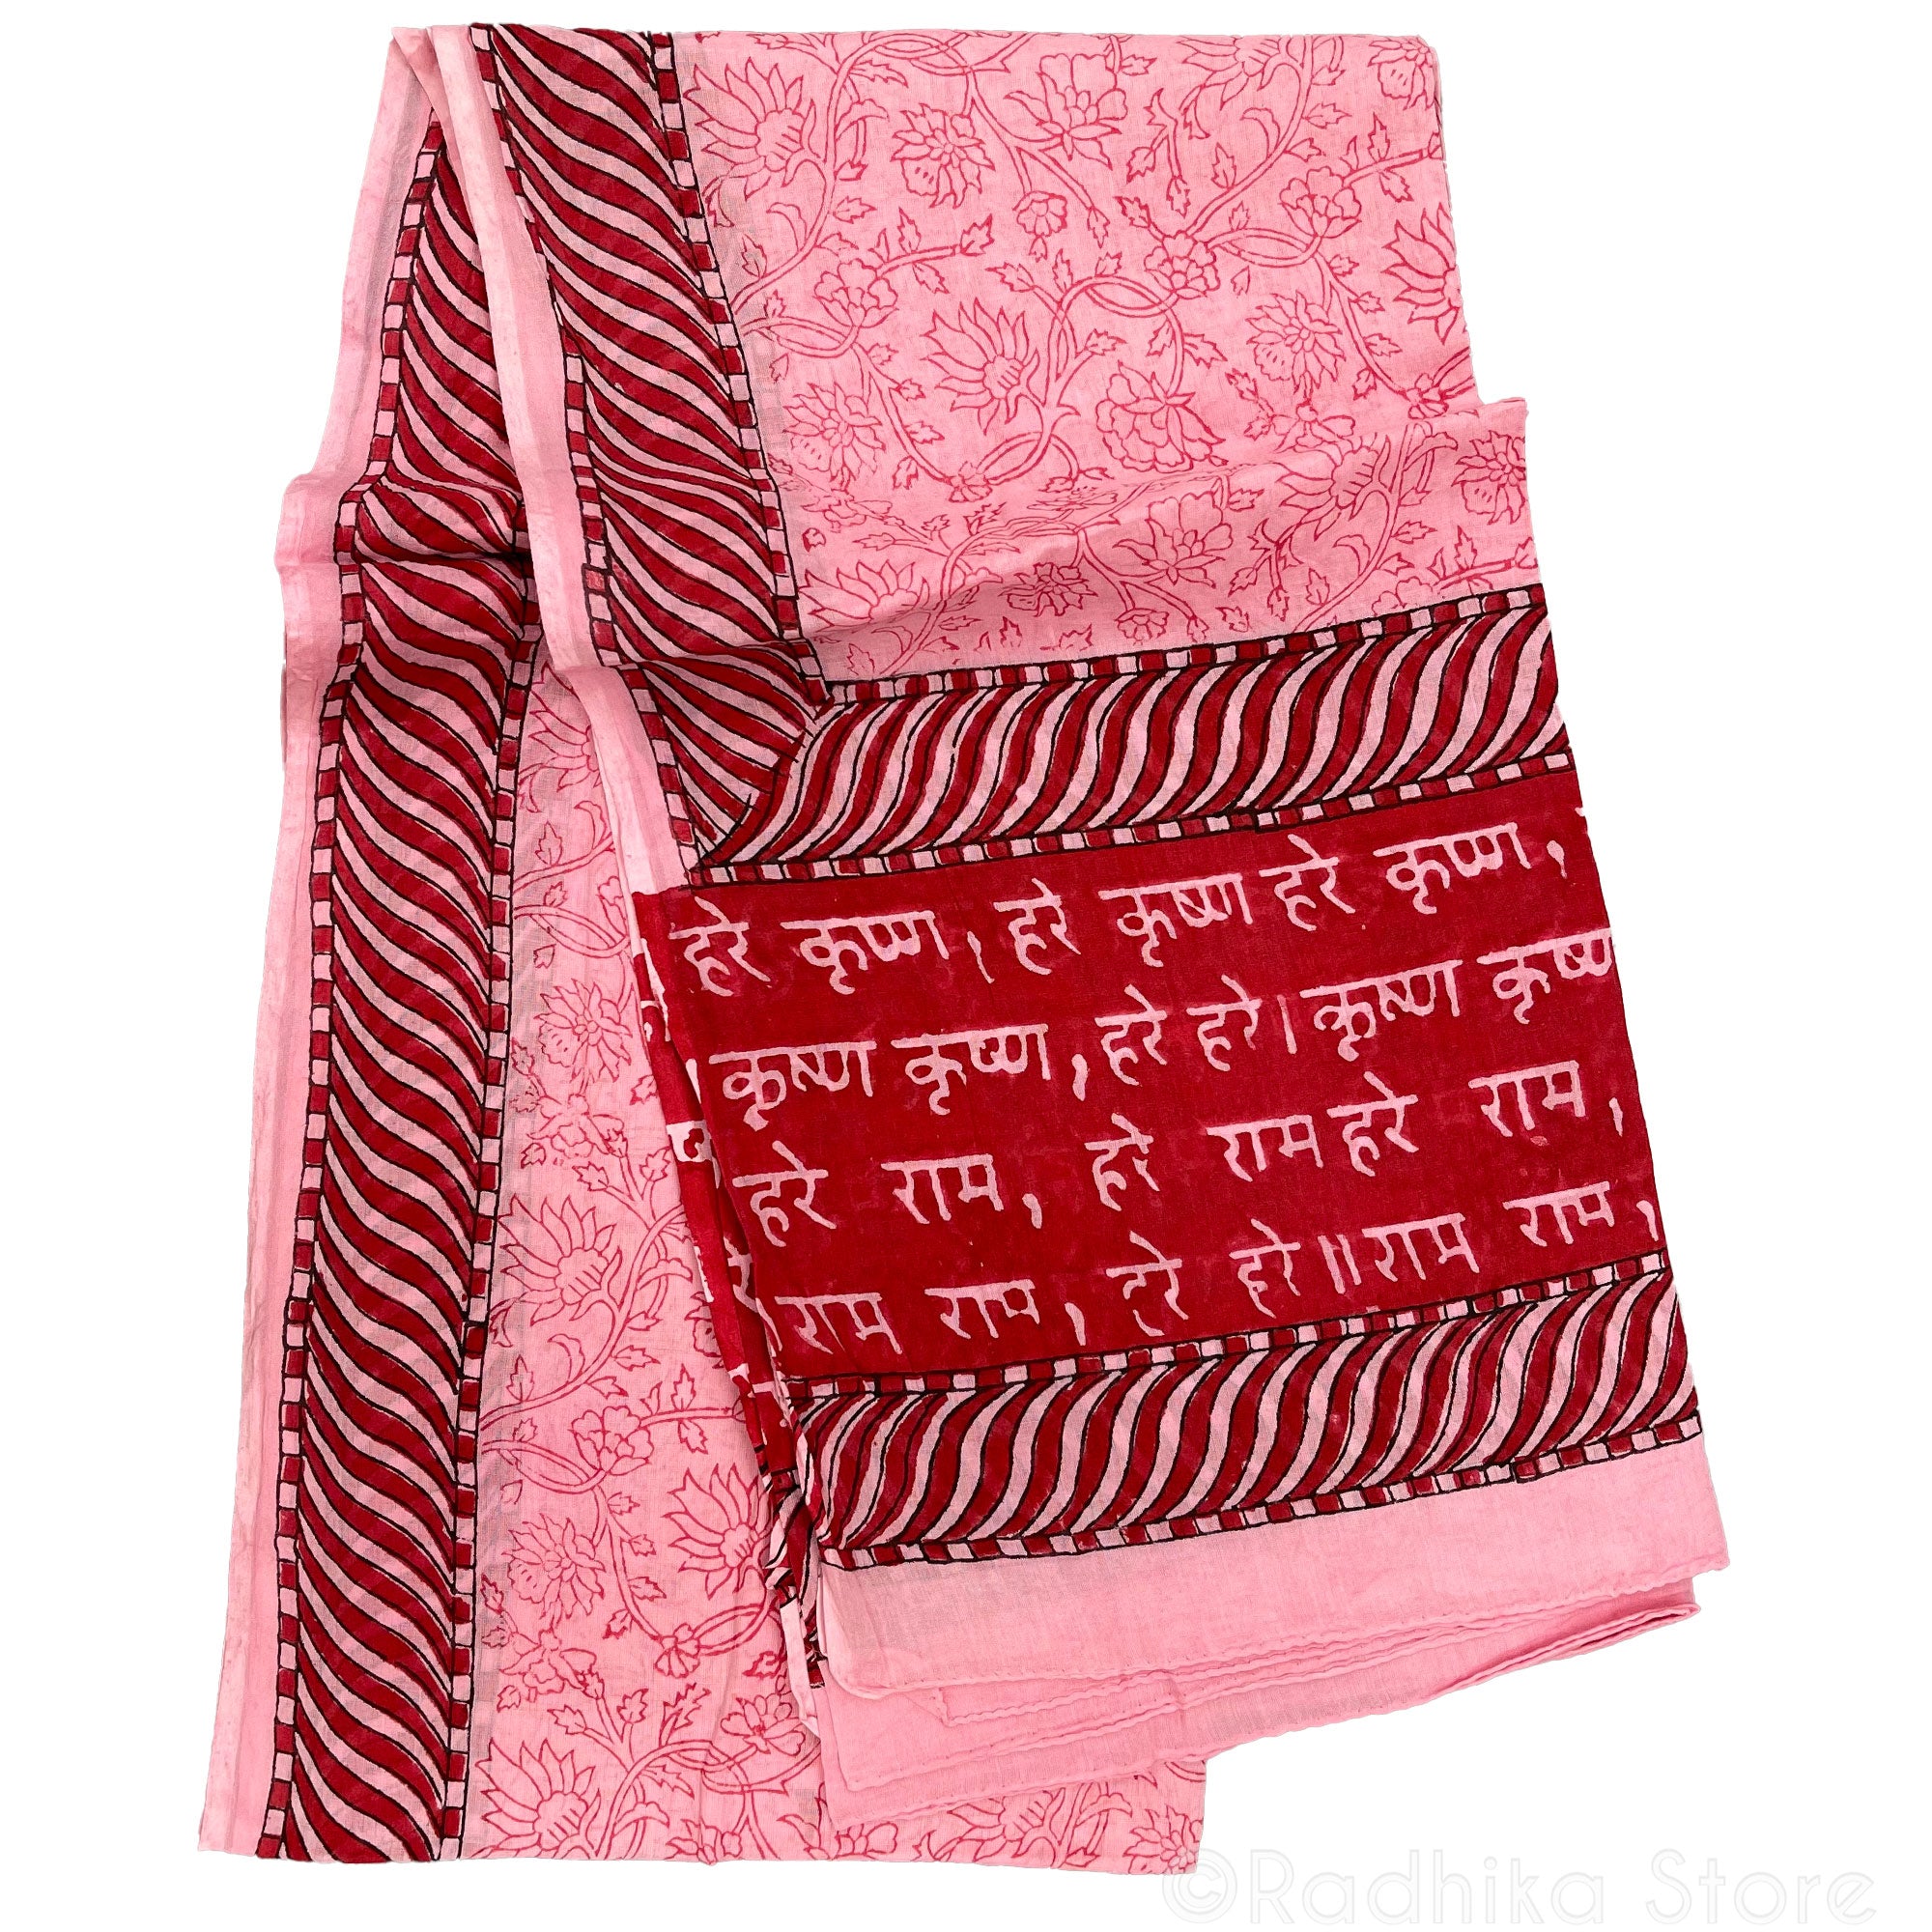 Maha Mantra Chadar -  Pink and Red - Vrindavan Garden